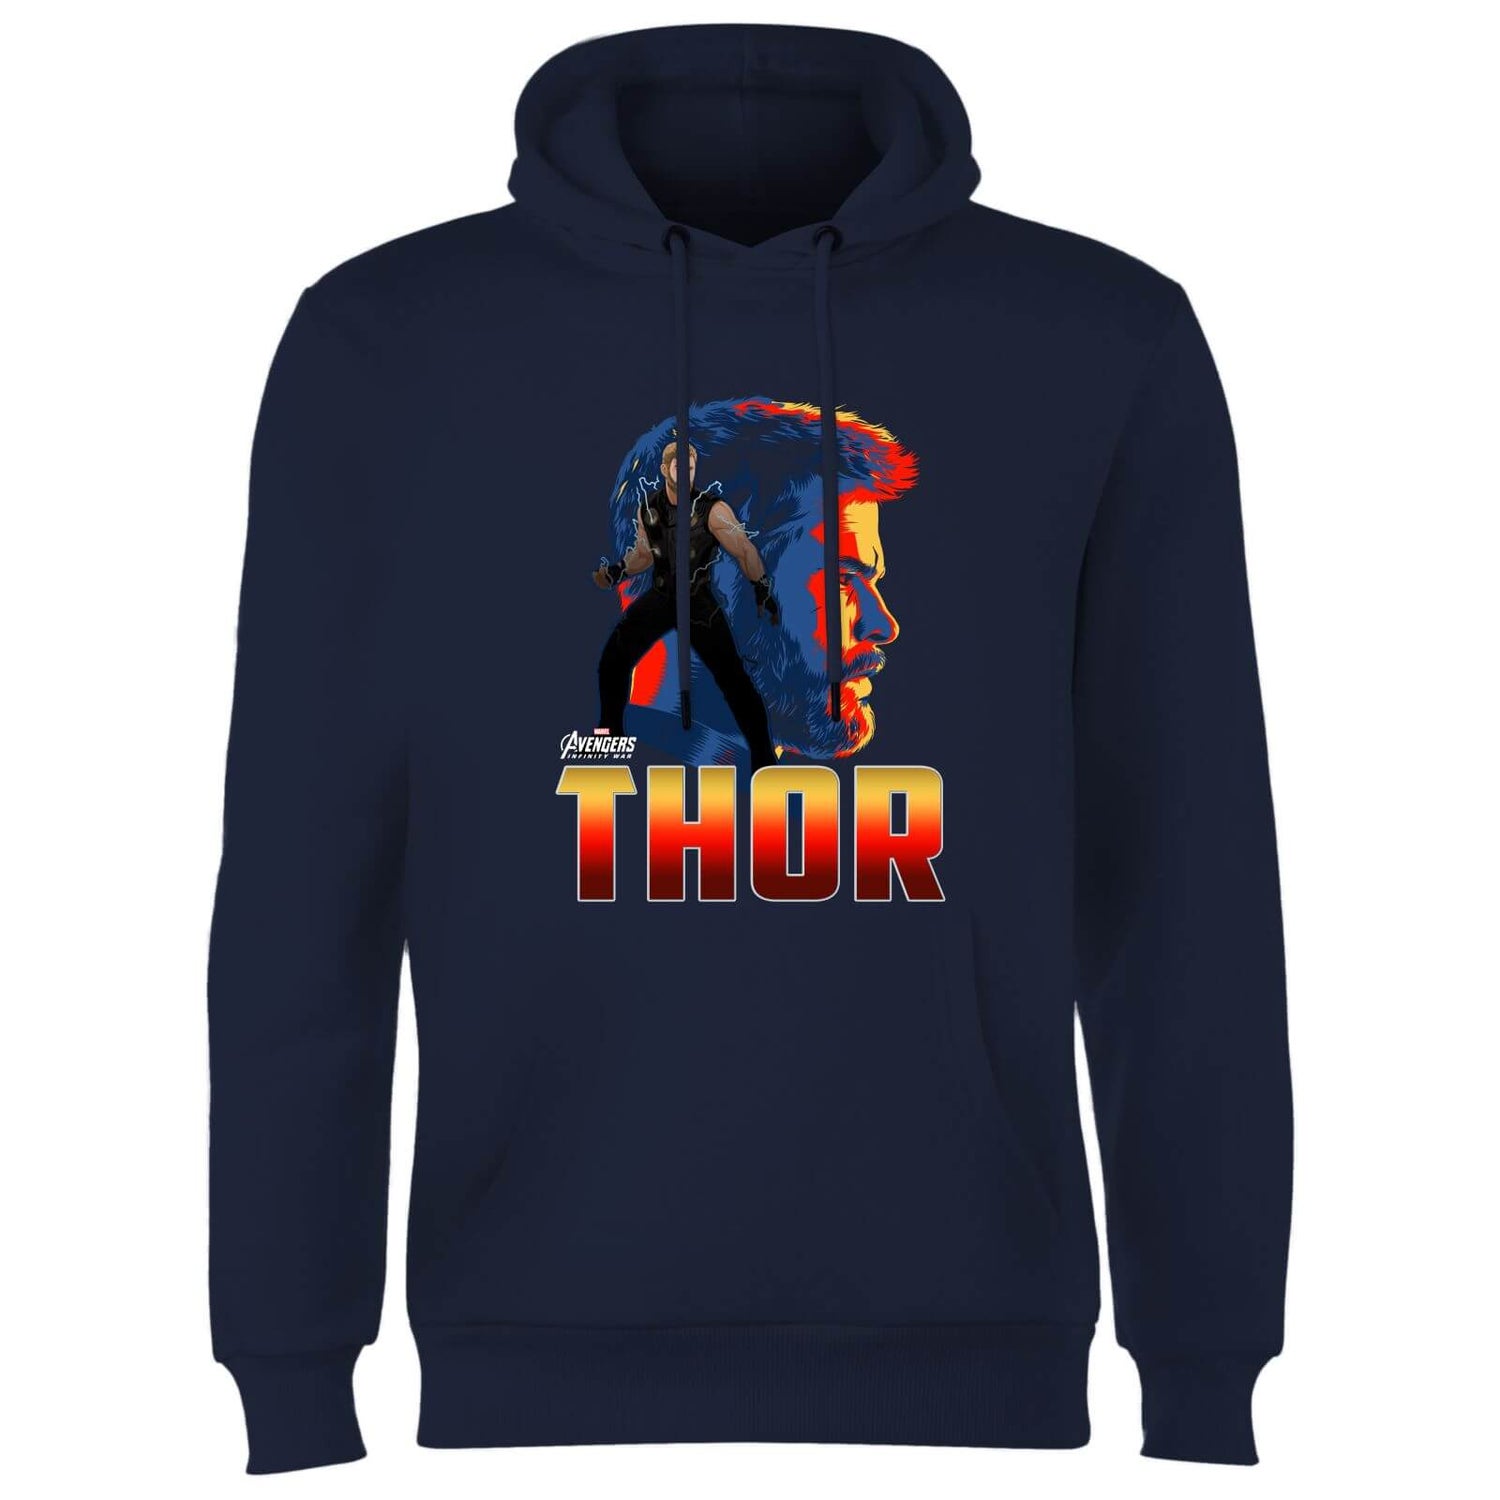 Avengers Thor Hoodie - Navy